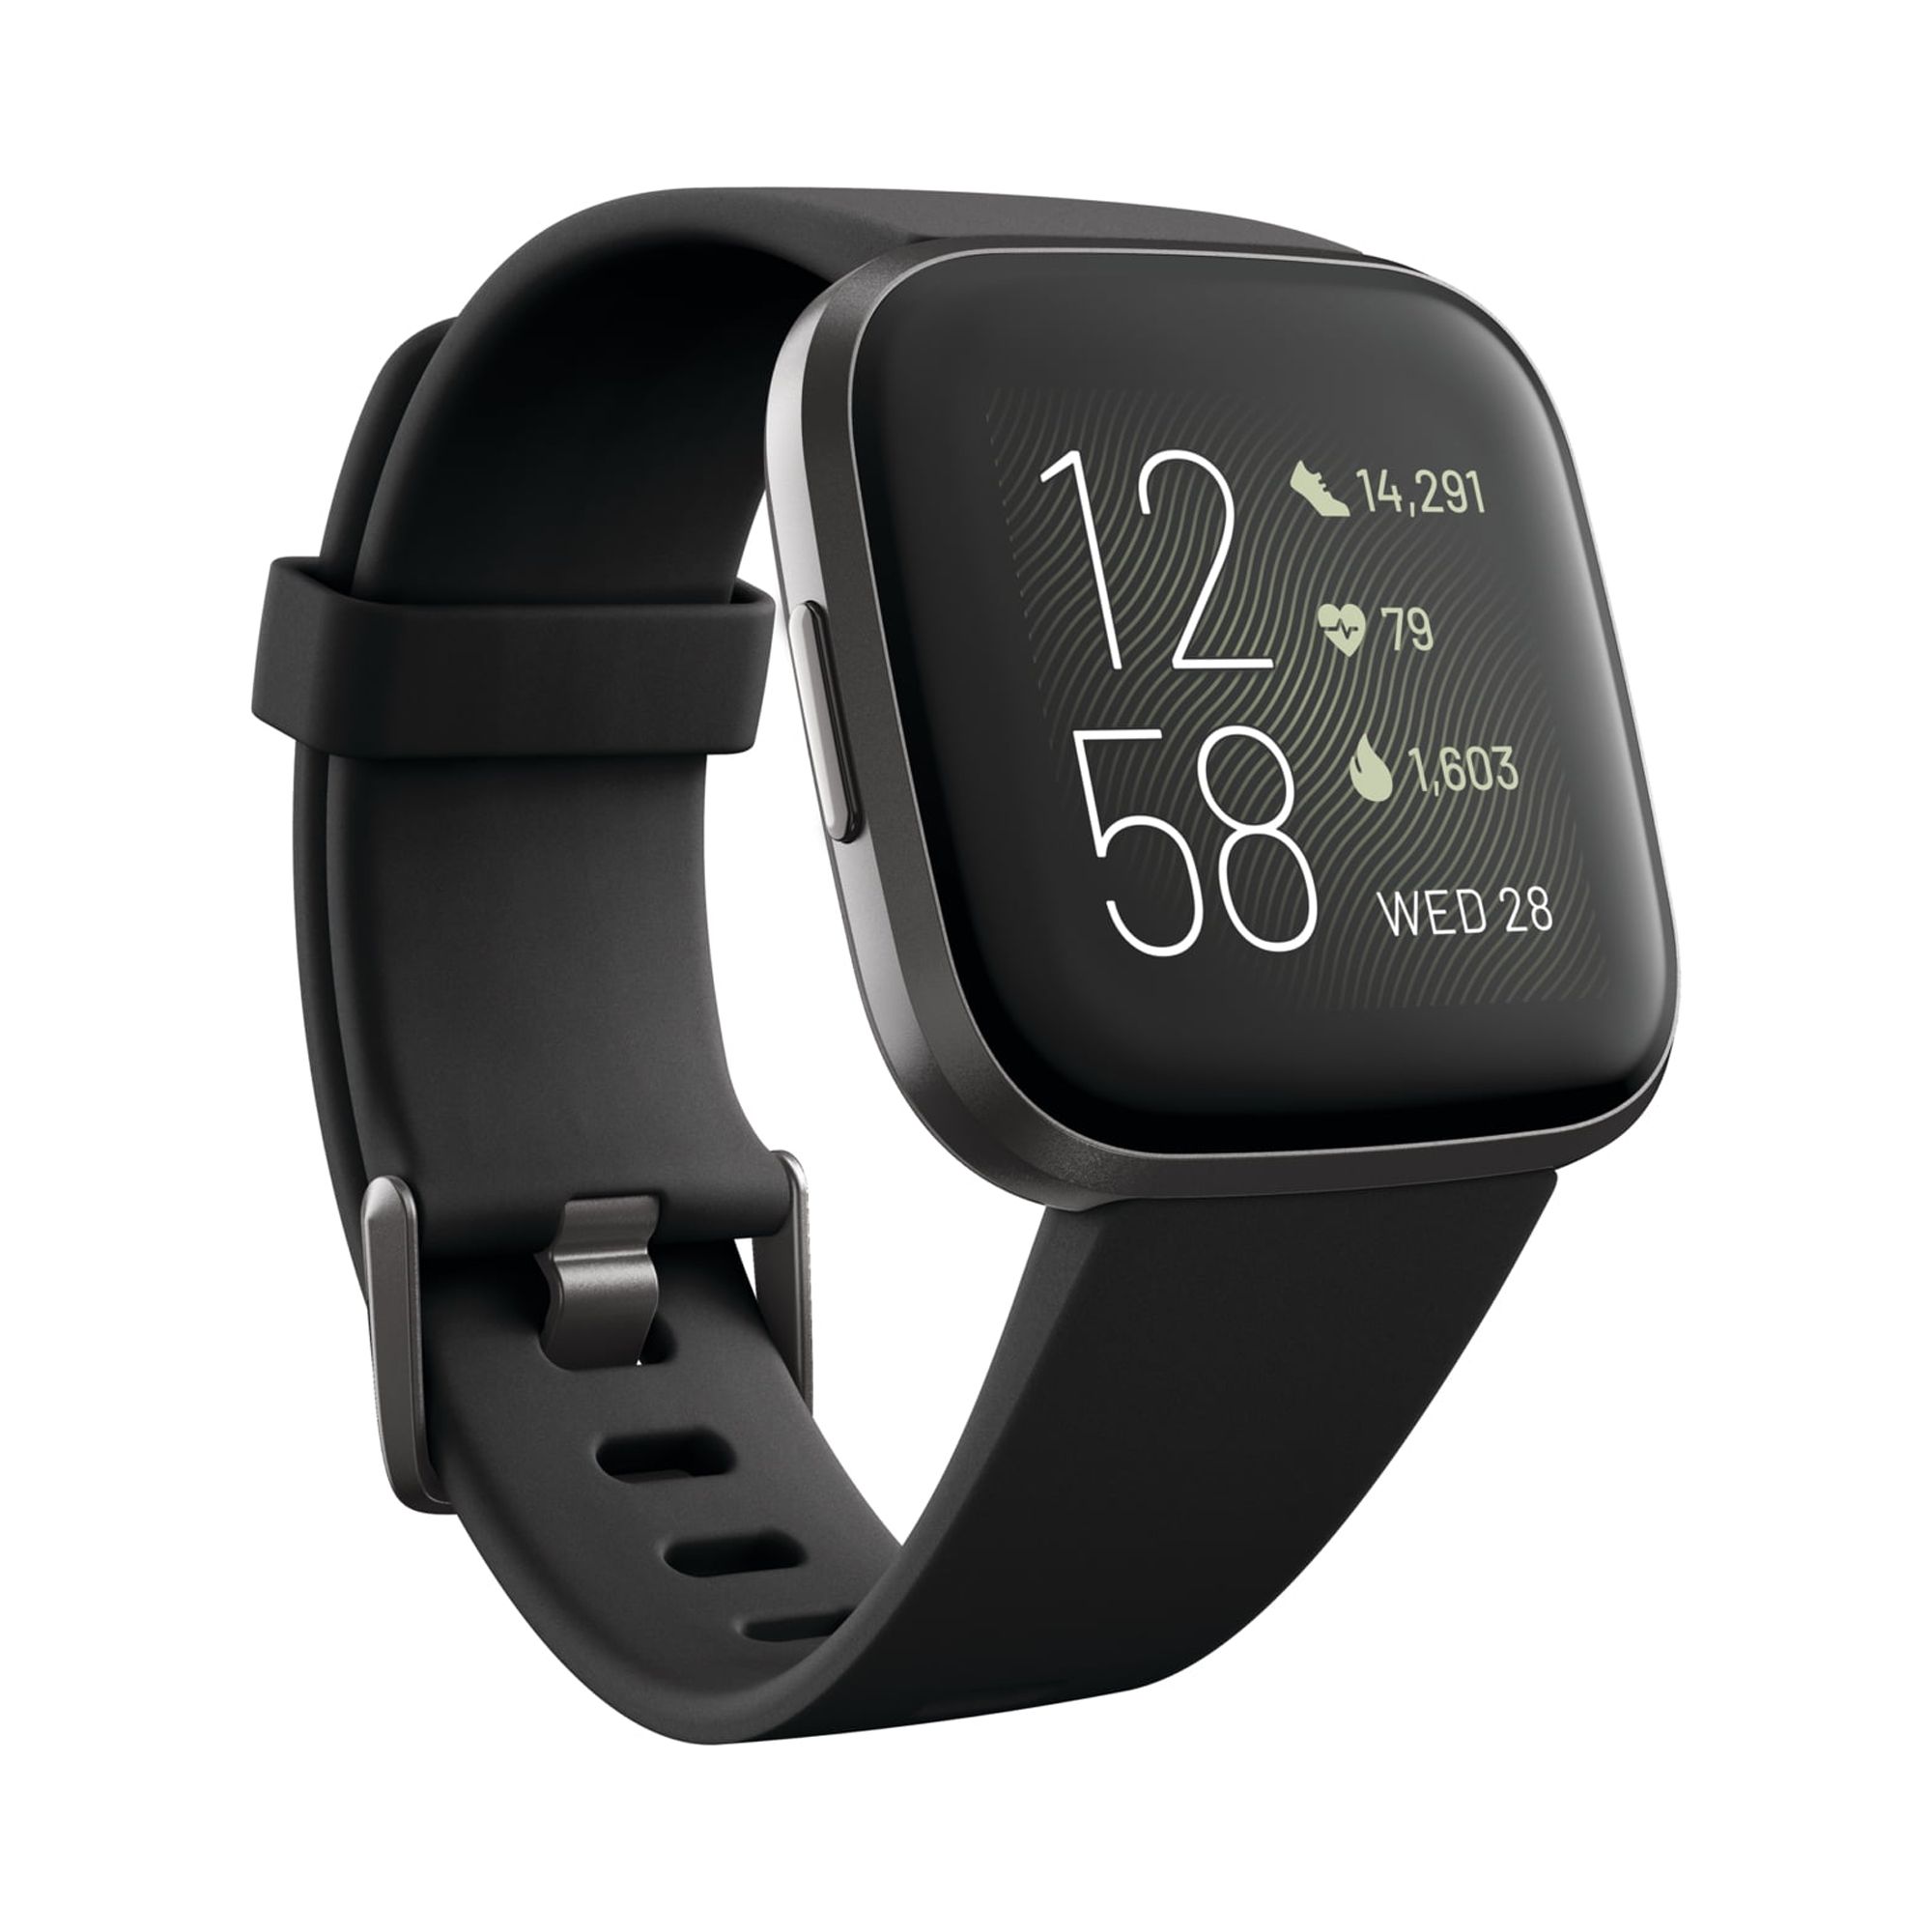 Fitbit Versa 2 Health & Fitness Smartwatch - Black/Carbon Aluminum - image 1 of 6